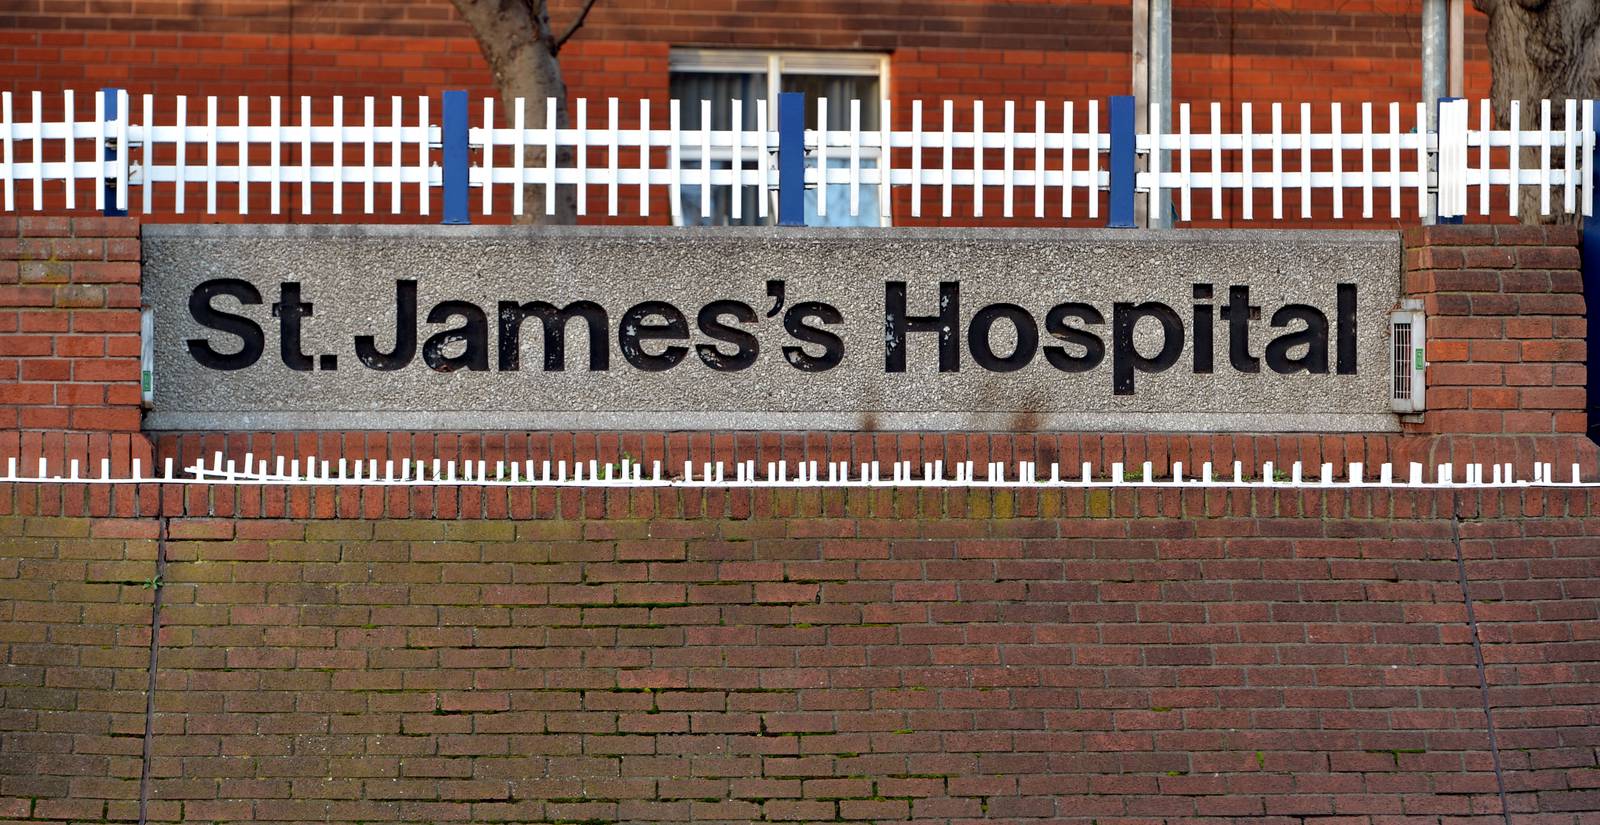 20/01/2014 - web -  St James Hospital - Stock - General View - Web - GV 
Photo: David Sleator/THE IRISH TIMES